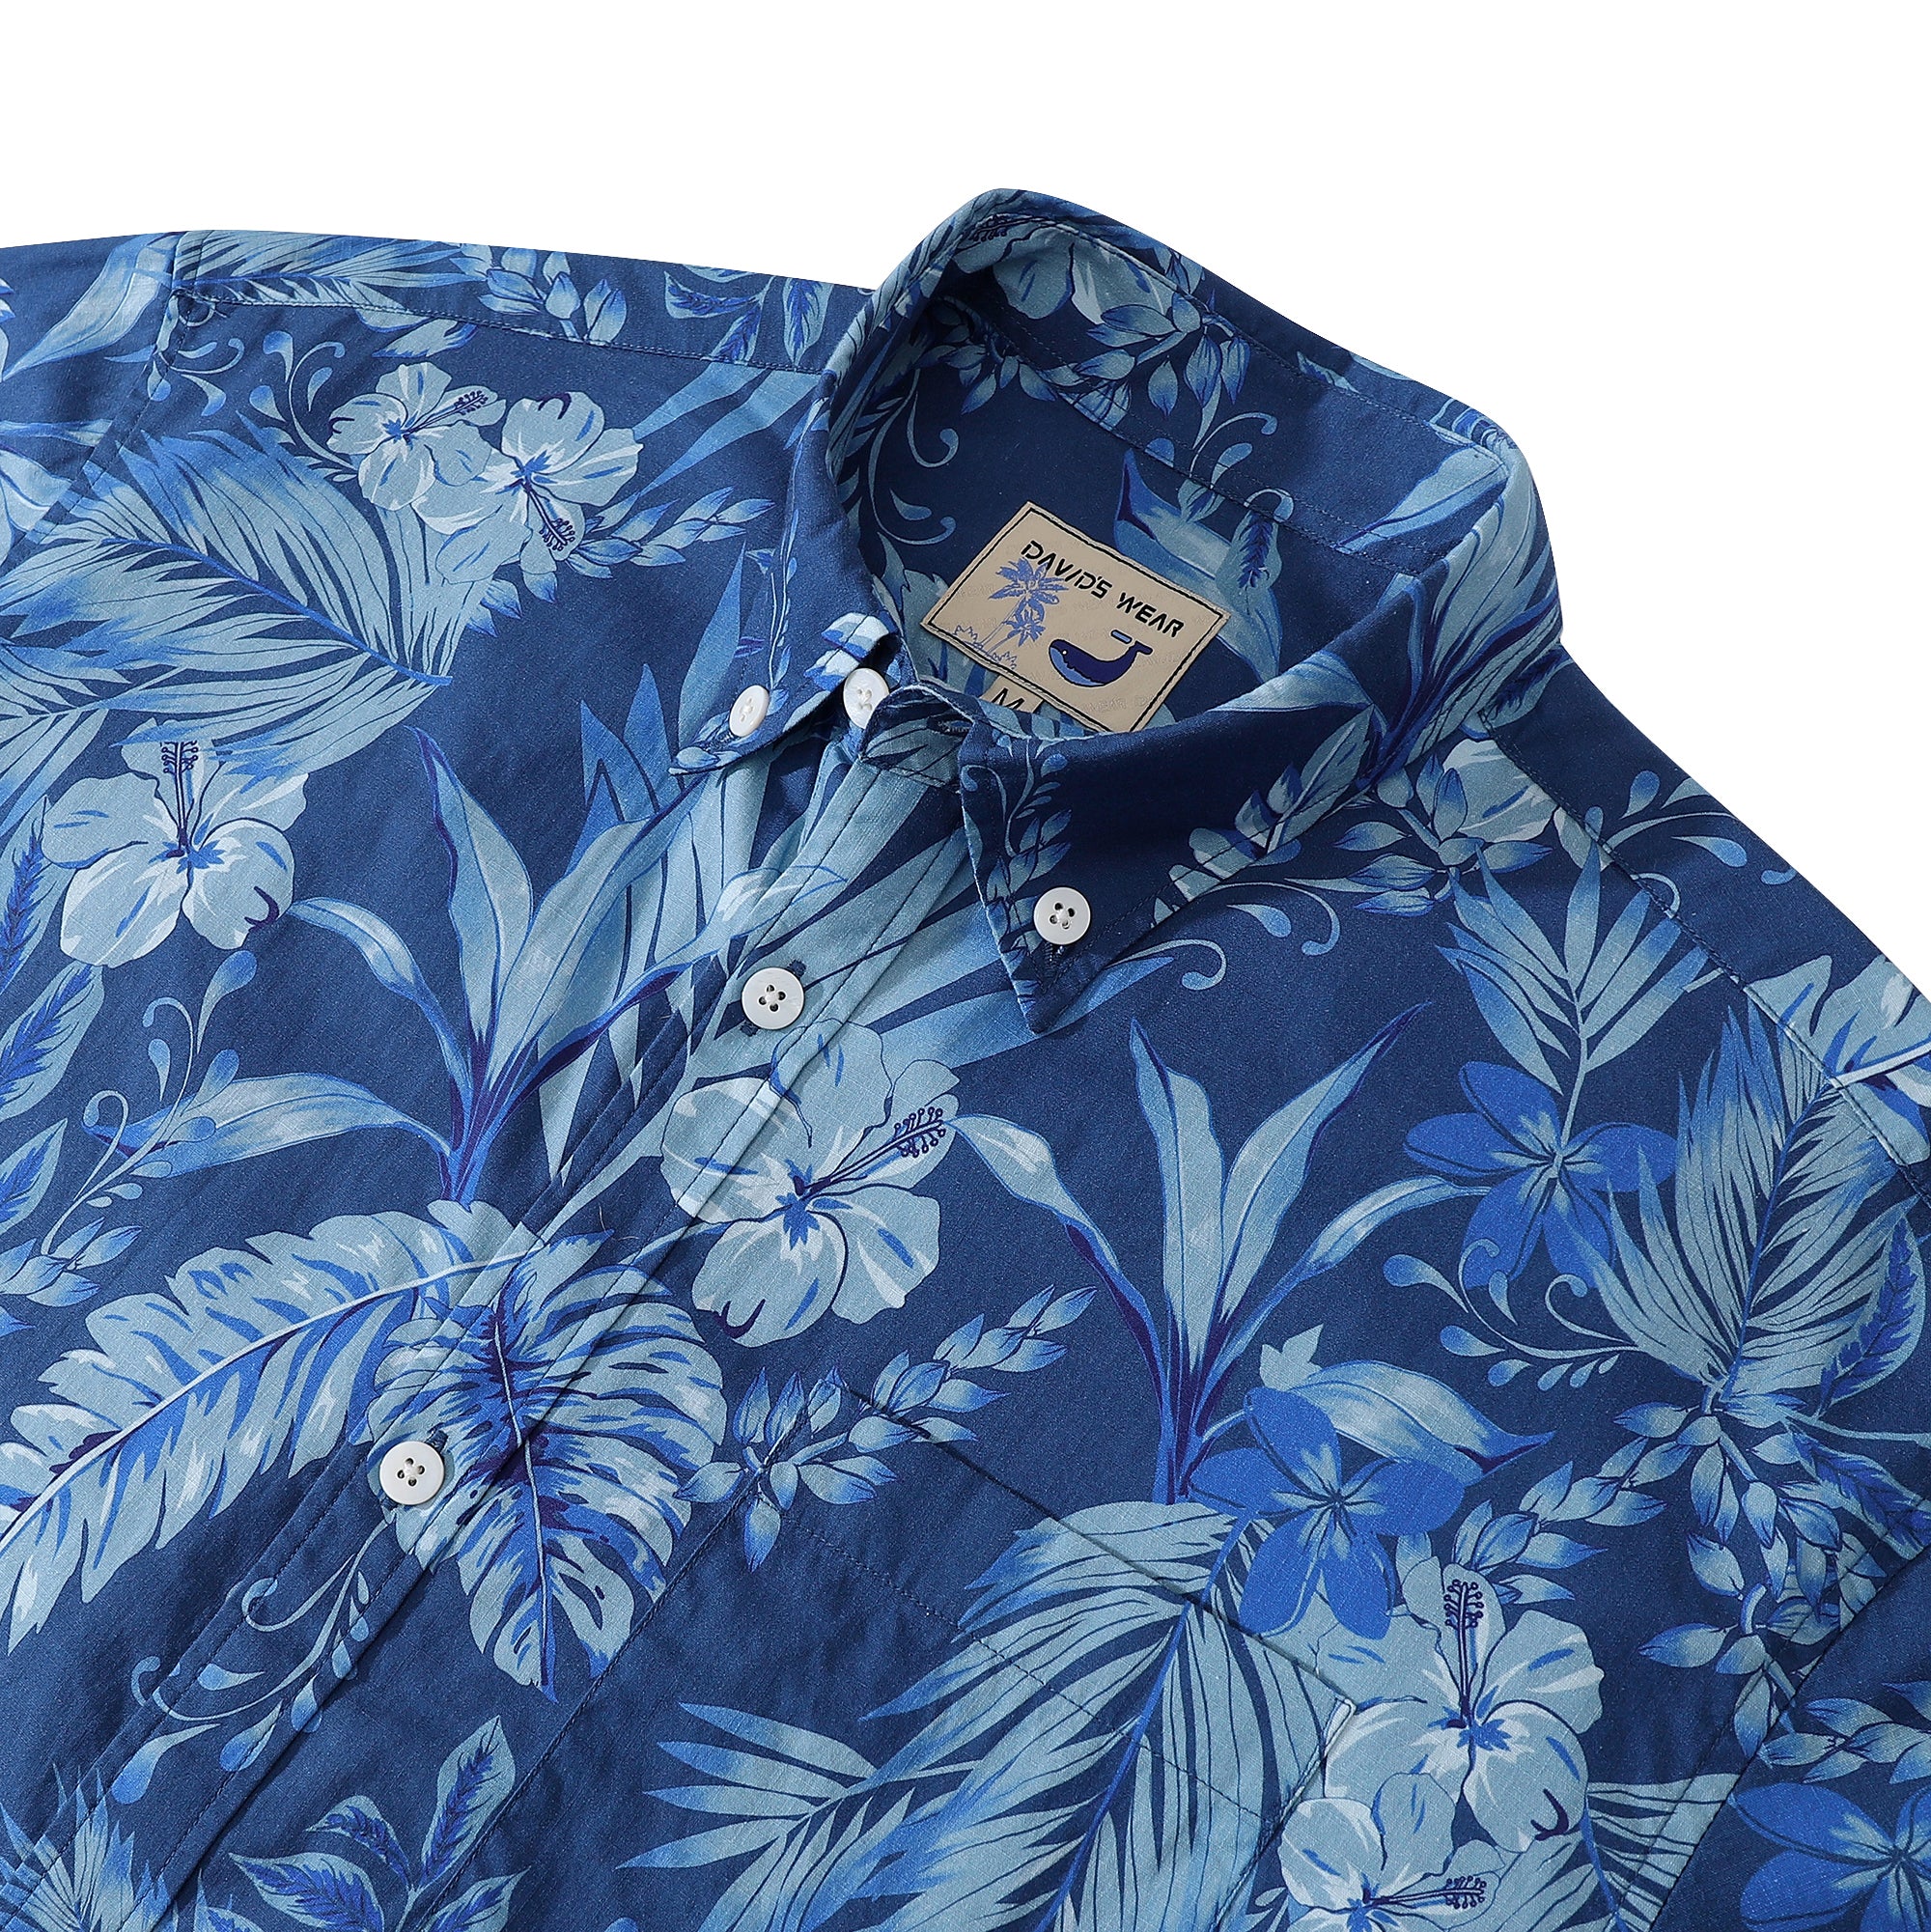 Mens Vintage Hawaiian Shirt 1920s Tropical Shirt Short Sleeve Button Up Shirt